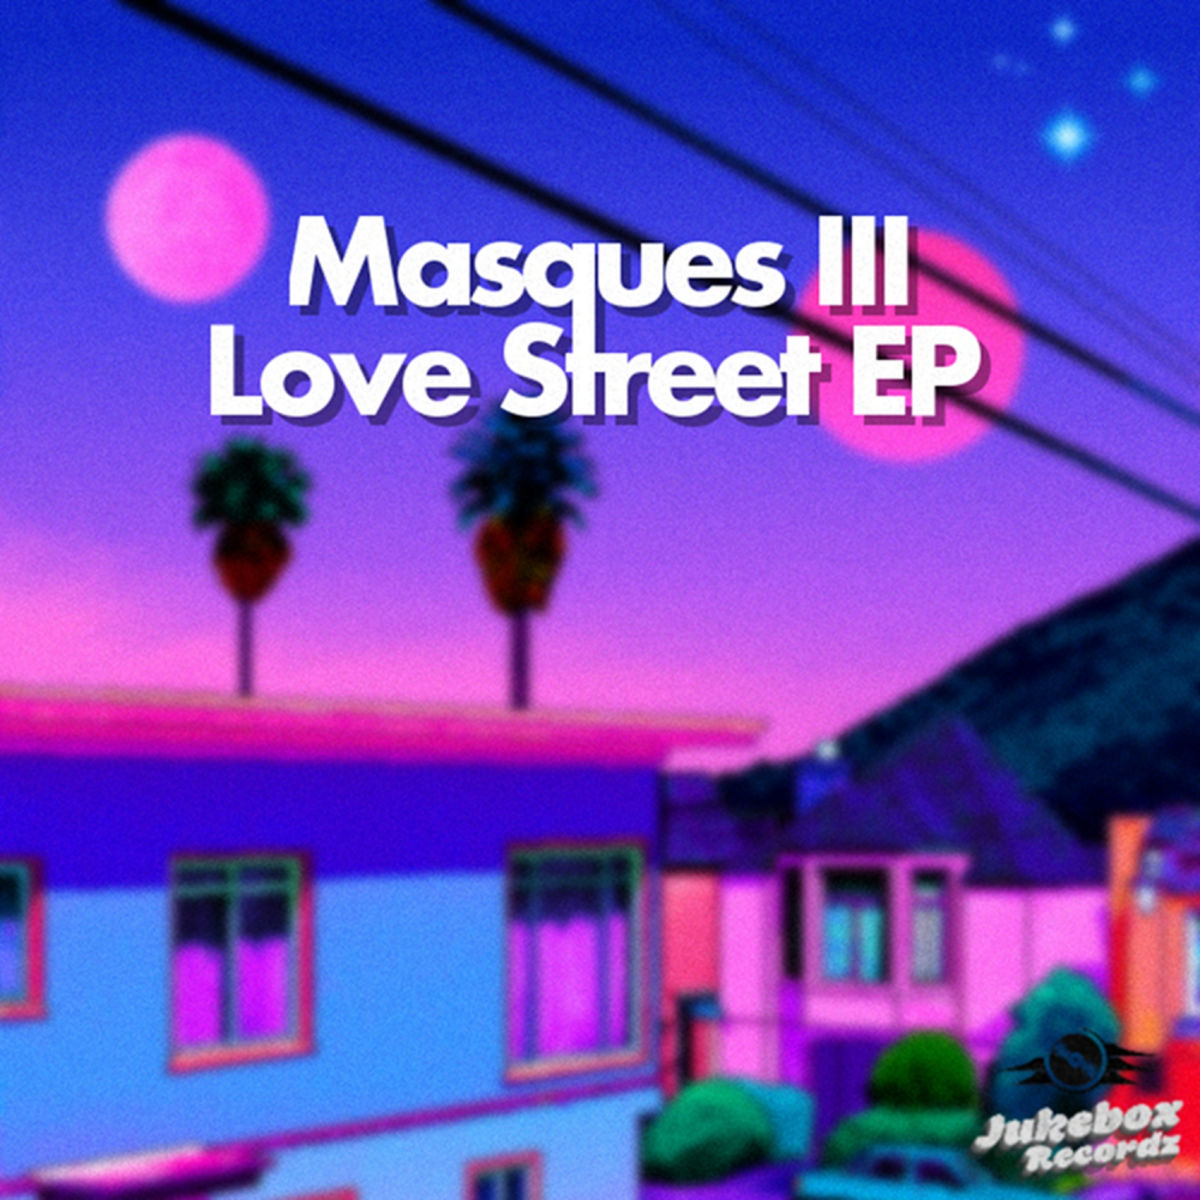 Masques III - Love Street / Jukebox Recordz